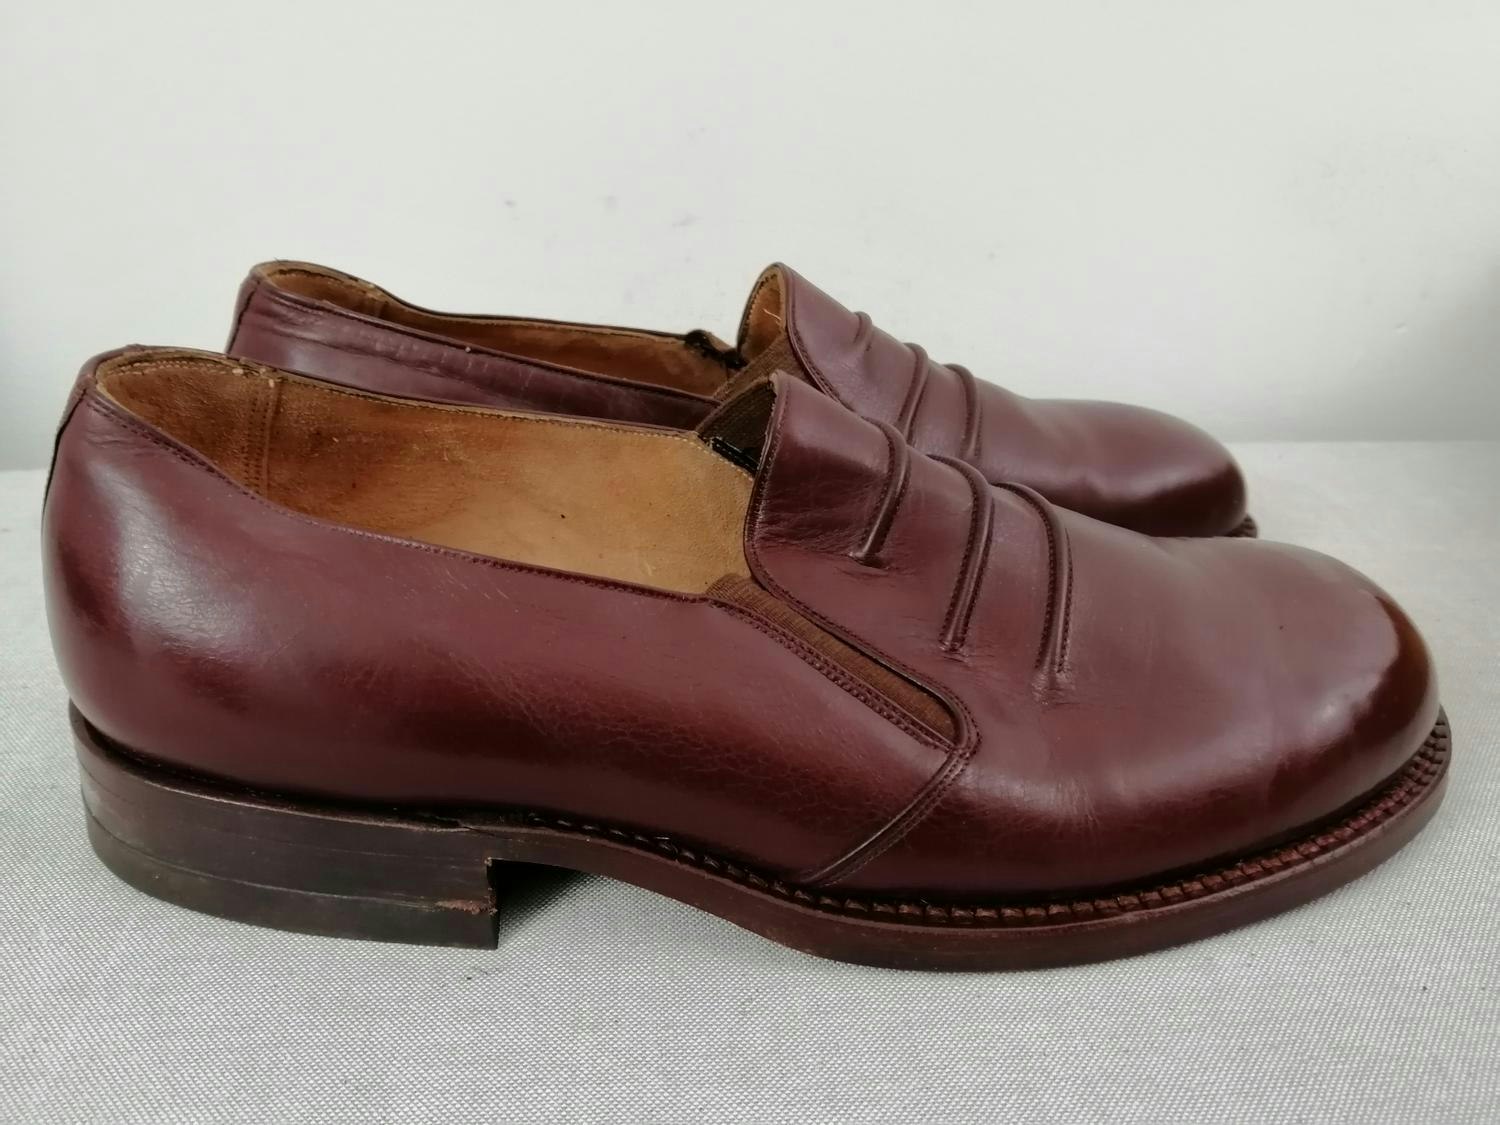 Vintage Lejonsko brun sko resår sidorna dekor fram stl 39A pojk - Vintage  Corner Österlen